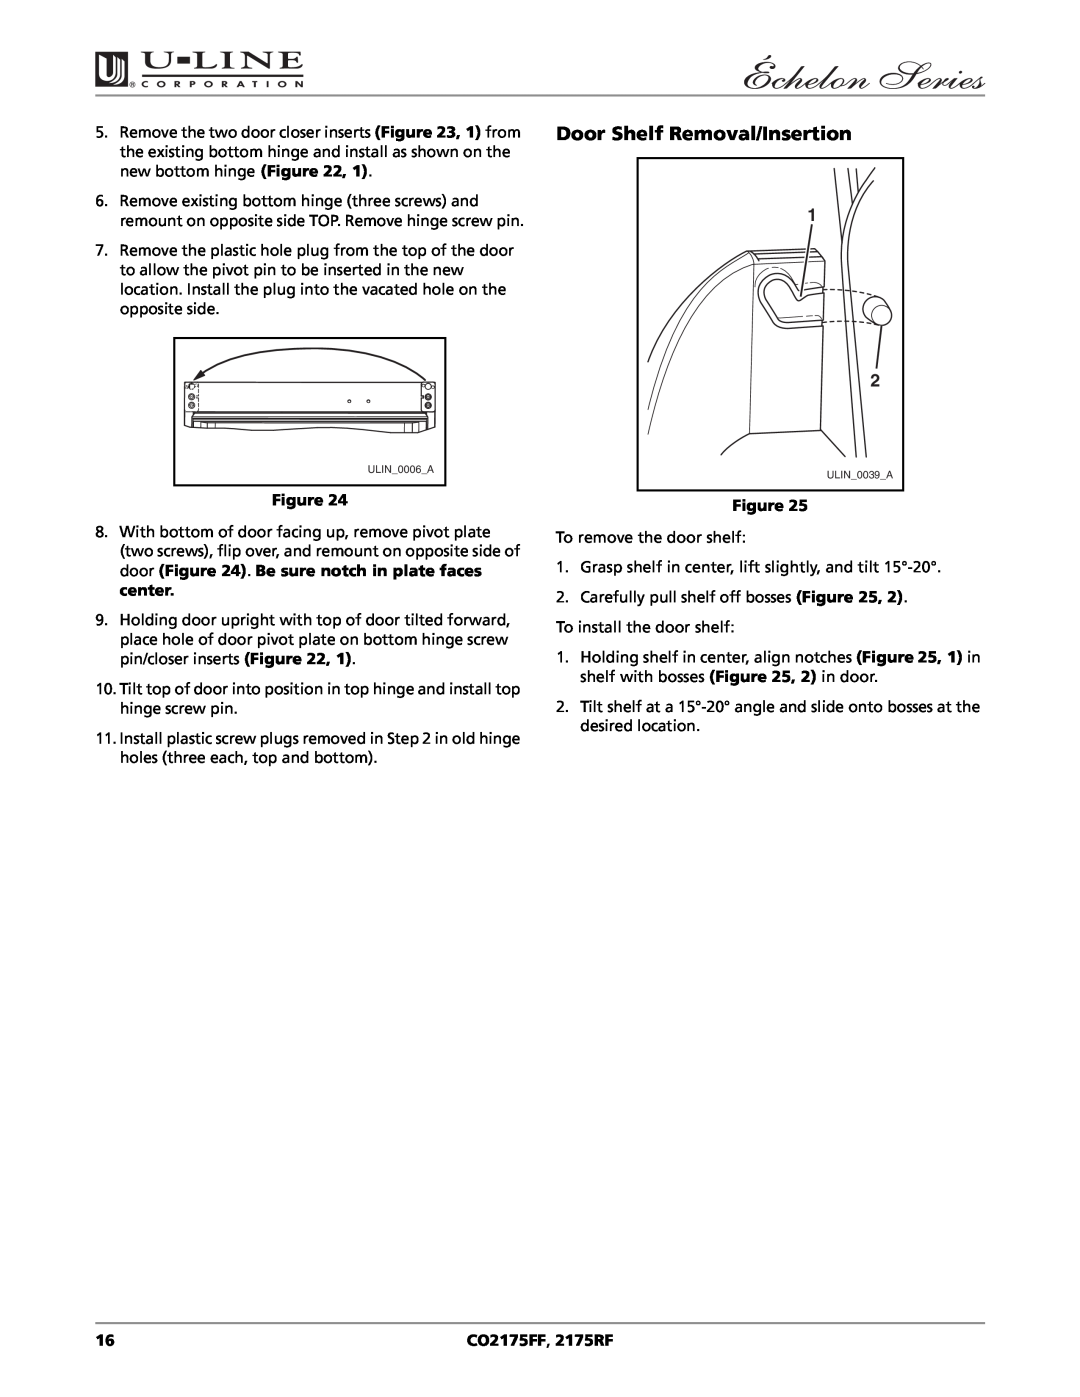 U-Line CO2175FF 2175RF manual Door Shelf Removal/Insertion, CO2175FF, 2175RF 